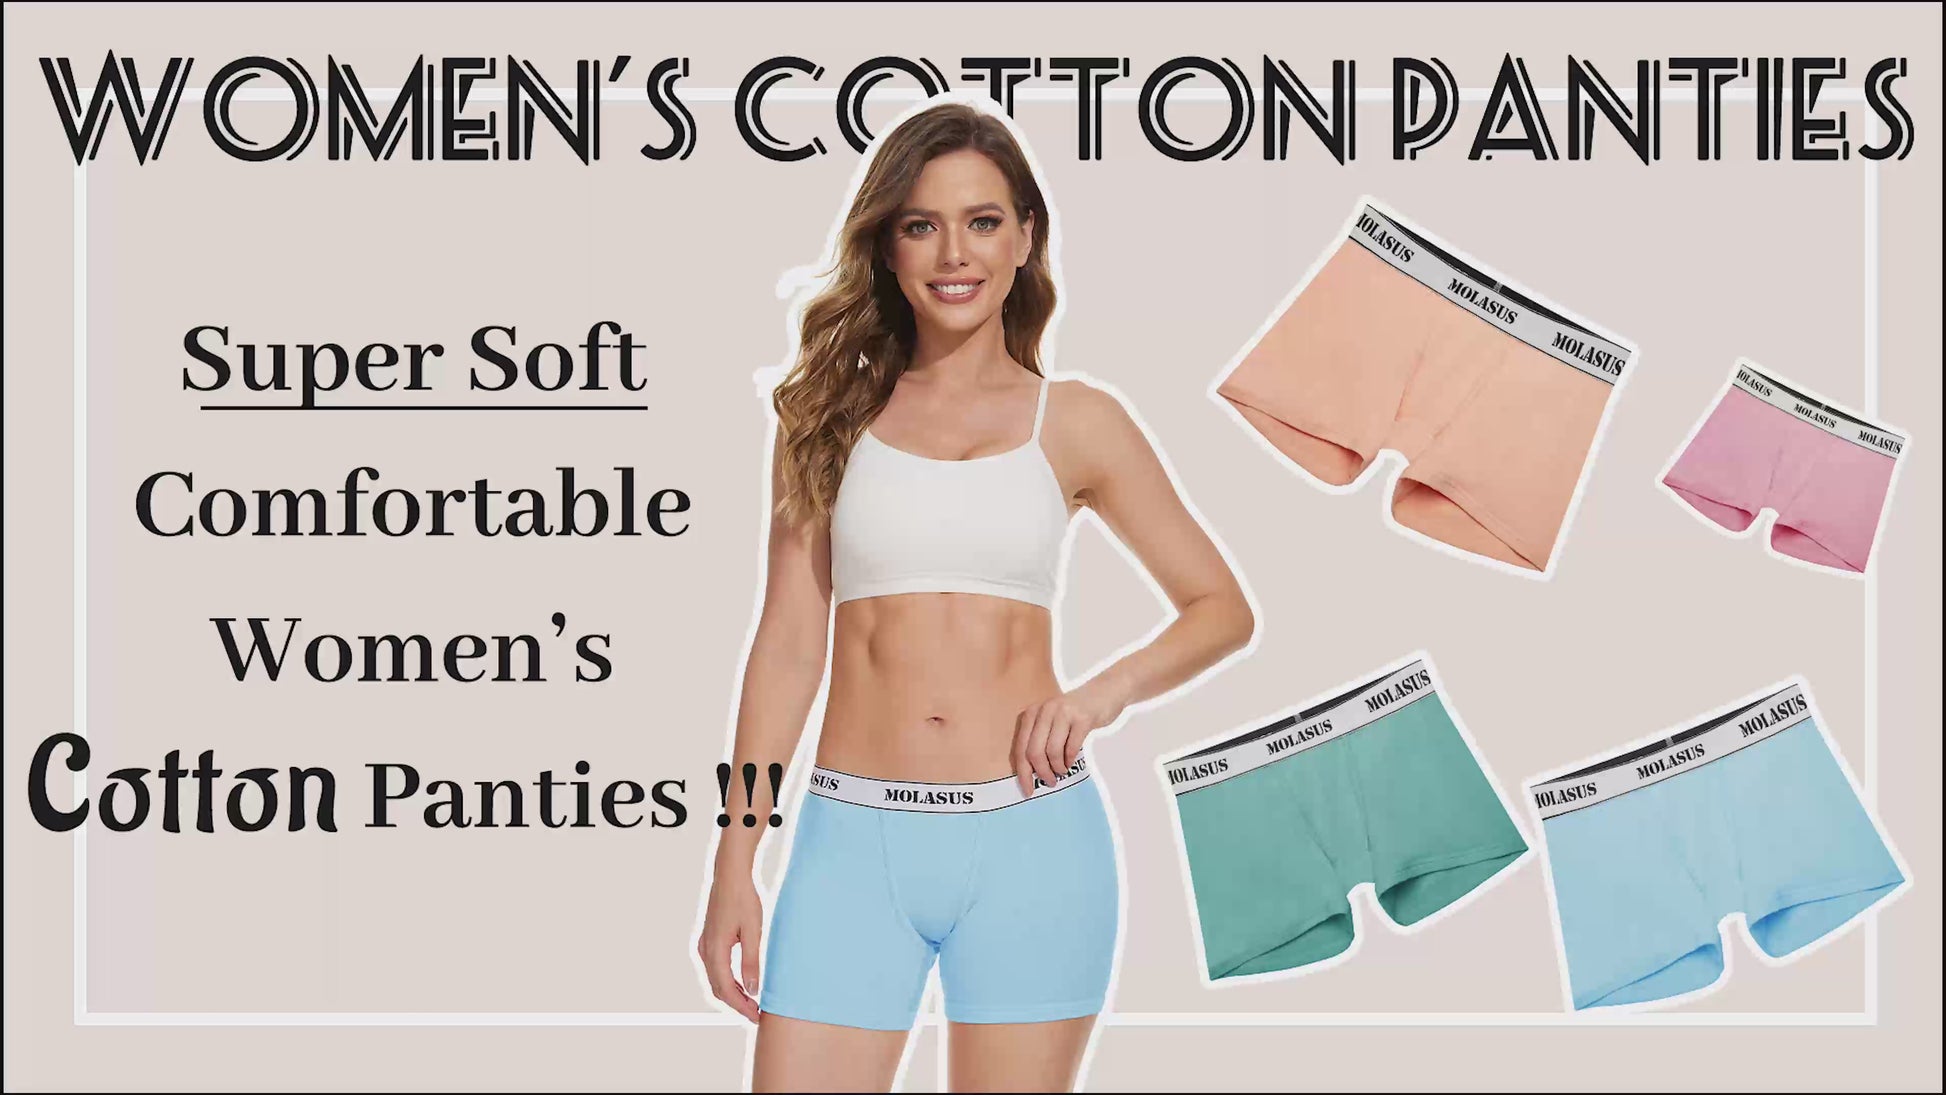 Molasus 4.5 Inseam Womens Cotton Boxer Briefs Underwear Boy Shorts Panties